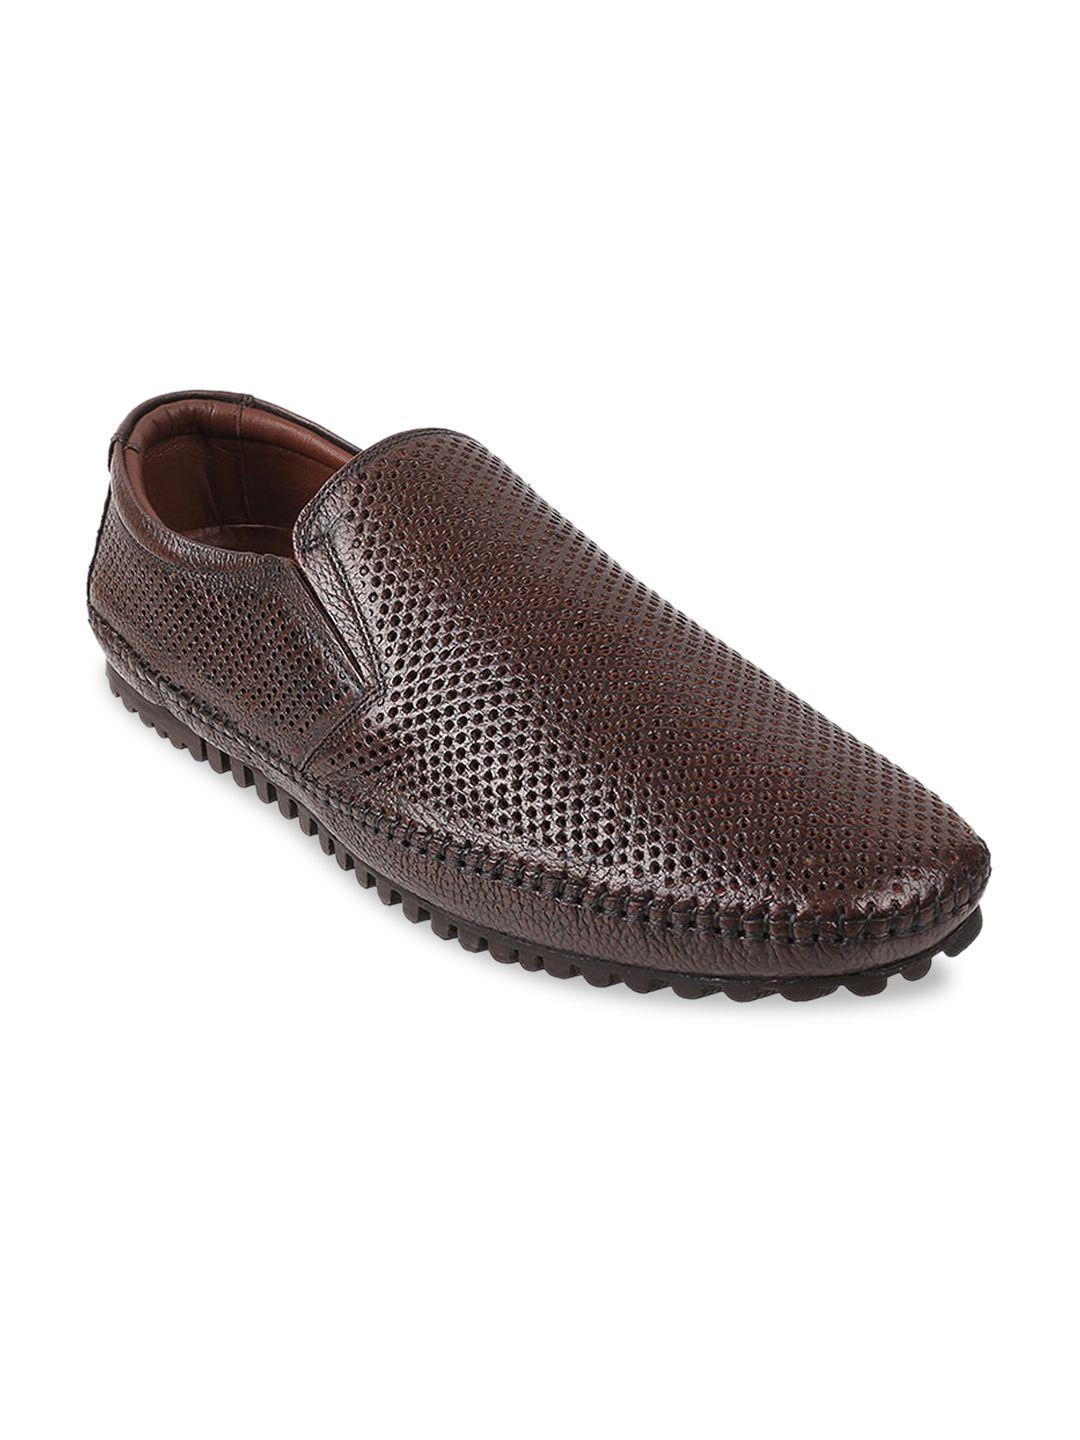 metro men brown textured leather slip-on sneakers